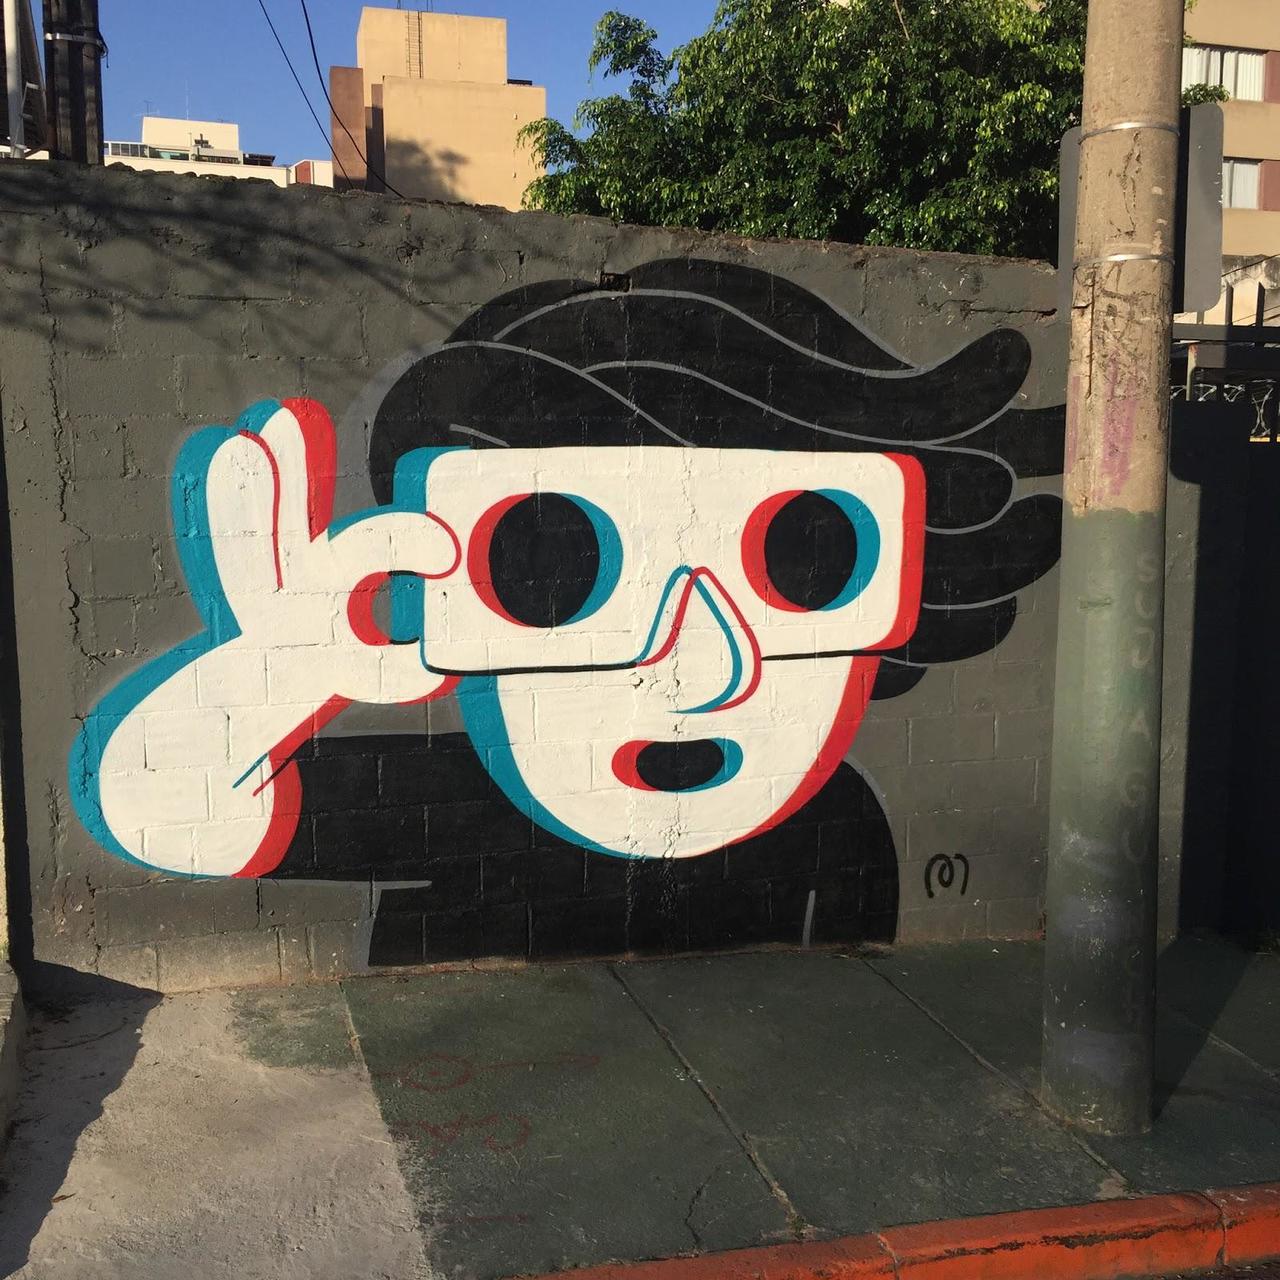 Muretz creates '3D Glasses', a new piece in Sao Paulo, Brazil. #StreetArt #Graffiti #Mural http://t.co/iO6quTeusF